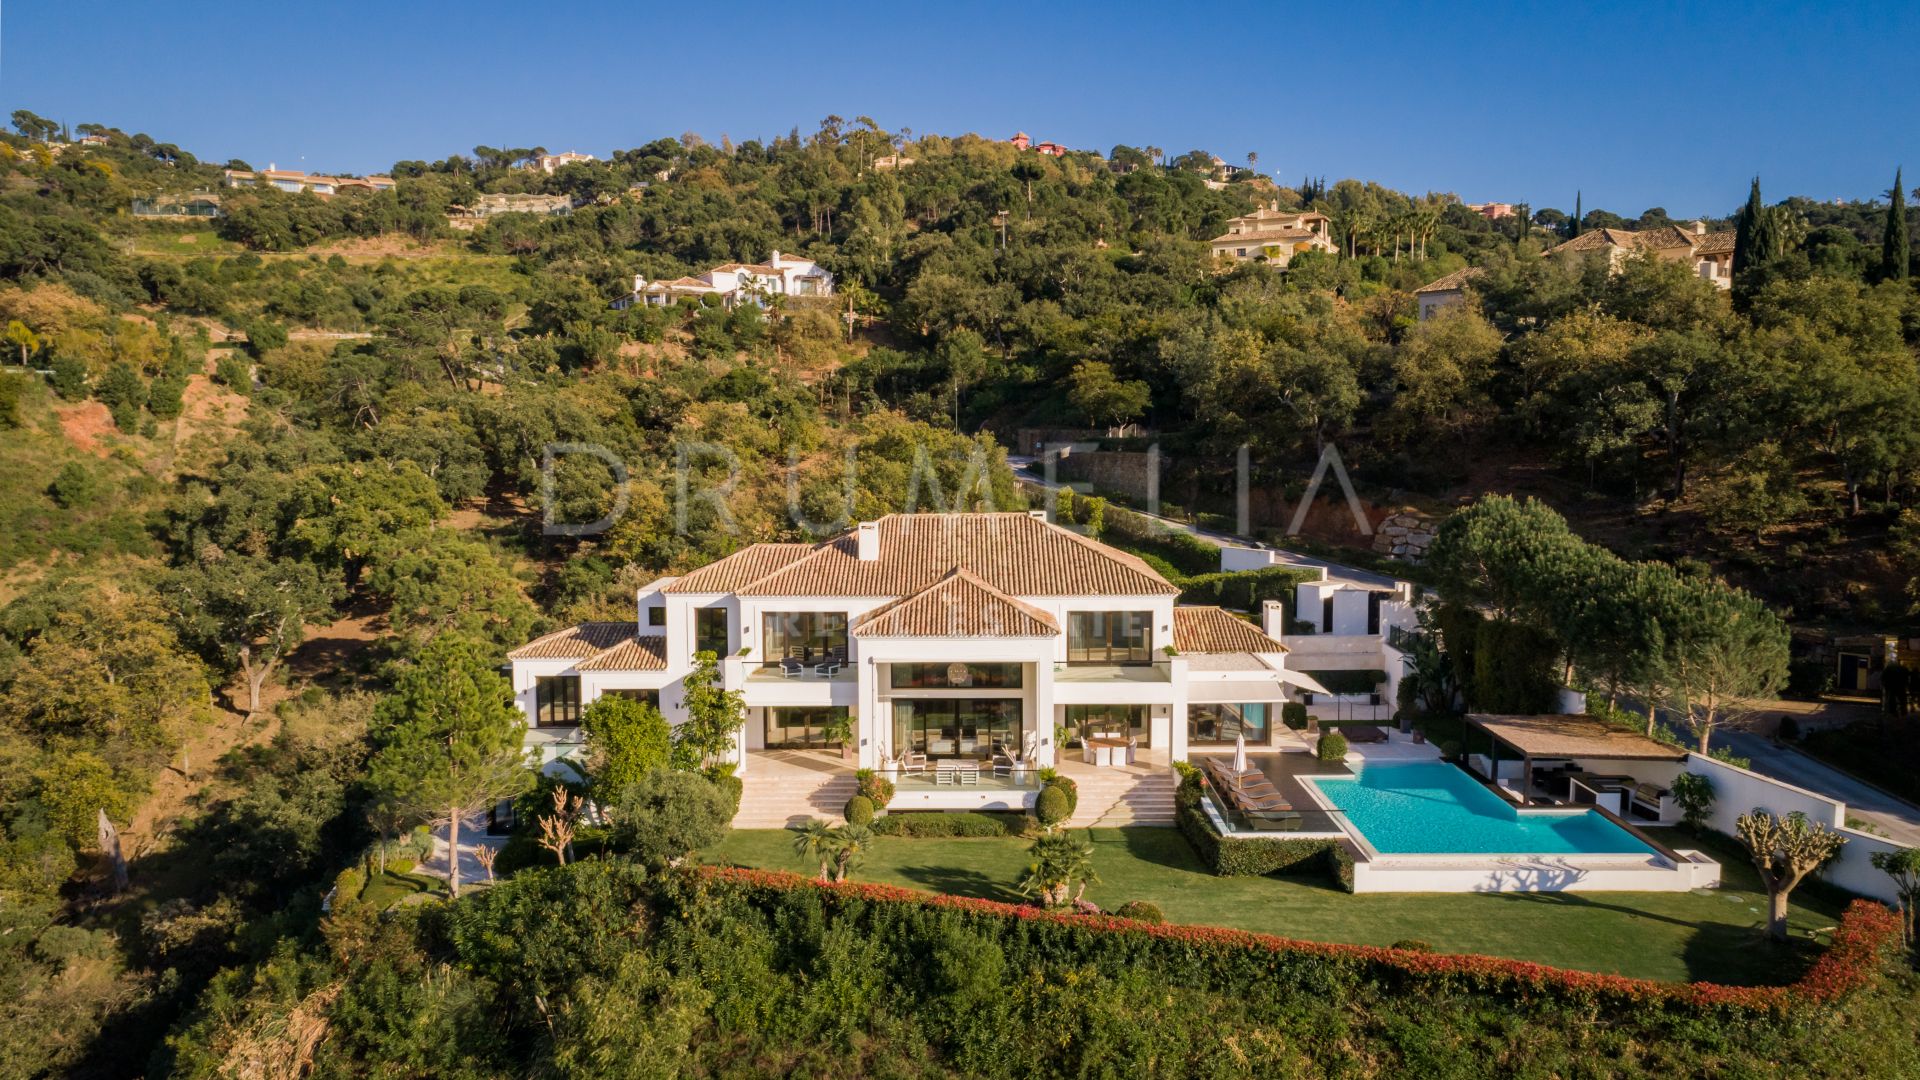 For Sale Stunning Luxurious House Modern Classic style, La Zagaleta, Benahavis